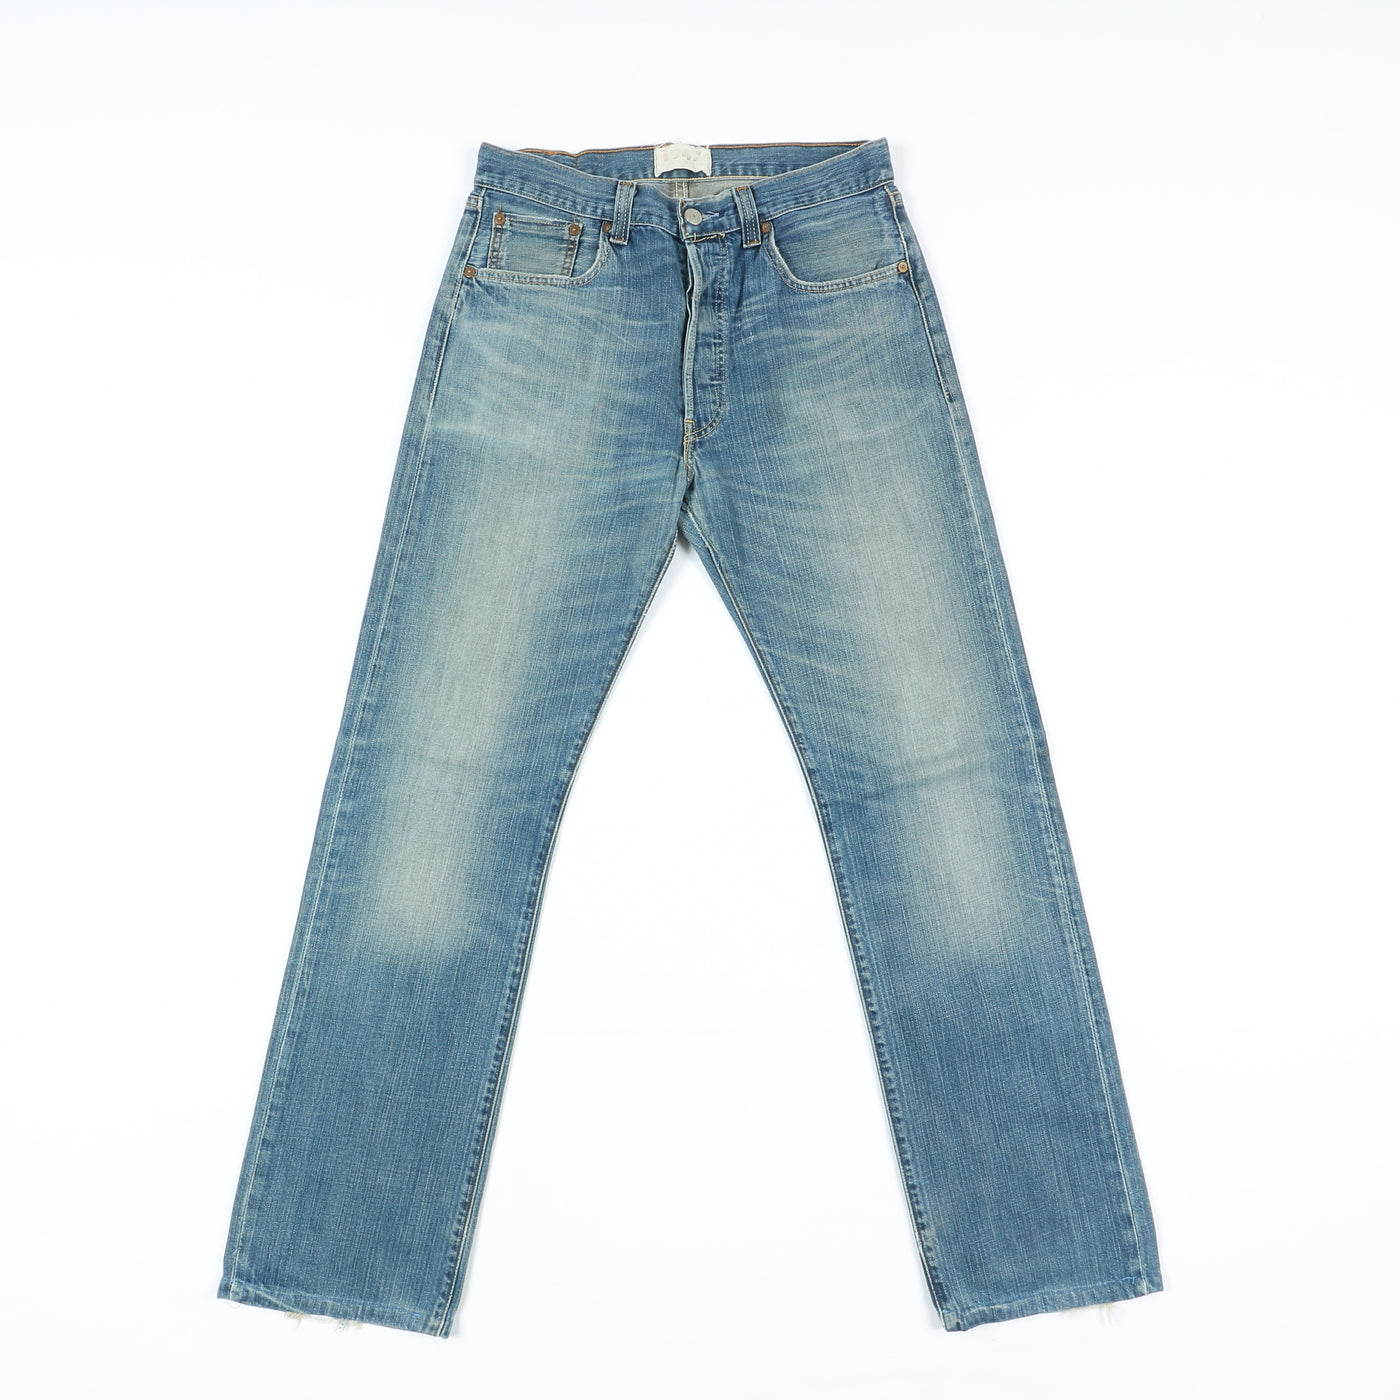 Levi's 501 Rivets 1947 Jeans Vintage Denim W32 Uomo Vita Alta Limited Edition